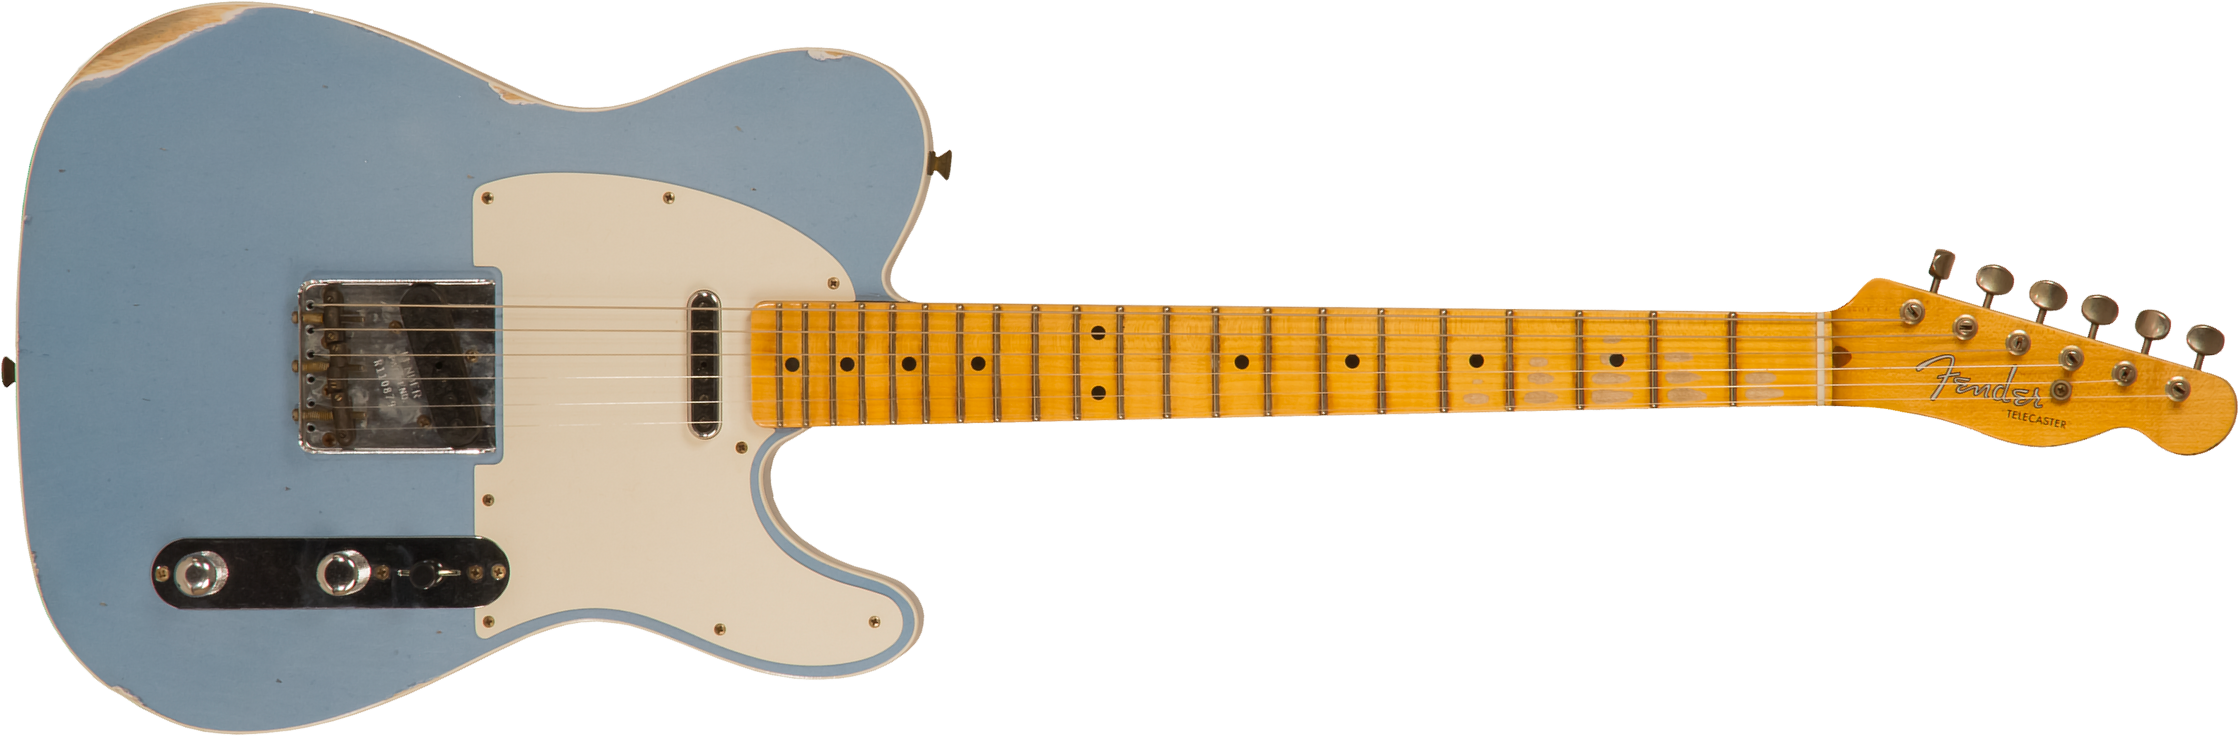 Fender Custom Shop Tele Custom Tomatillo 2s Ht Mn #r110879 - Relic Lake Placid Blue - E-Gitarre in Teleform - Main picture